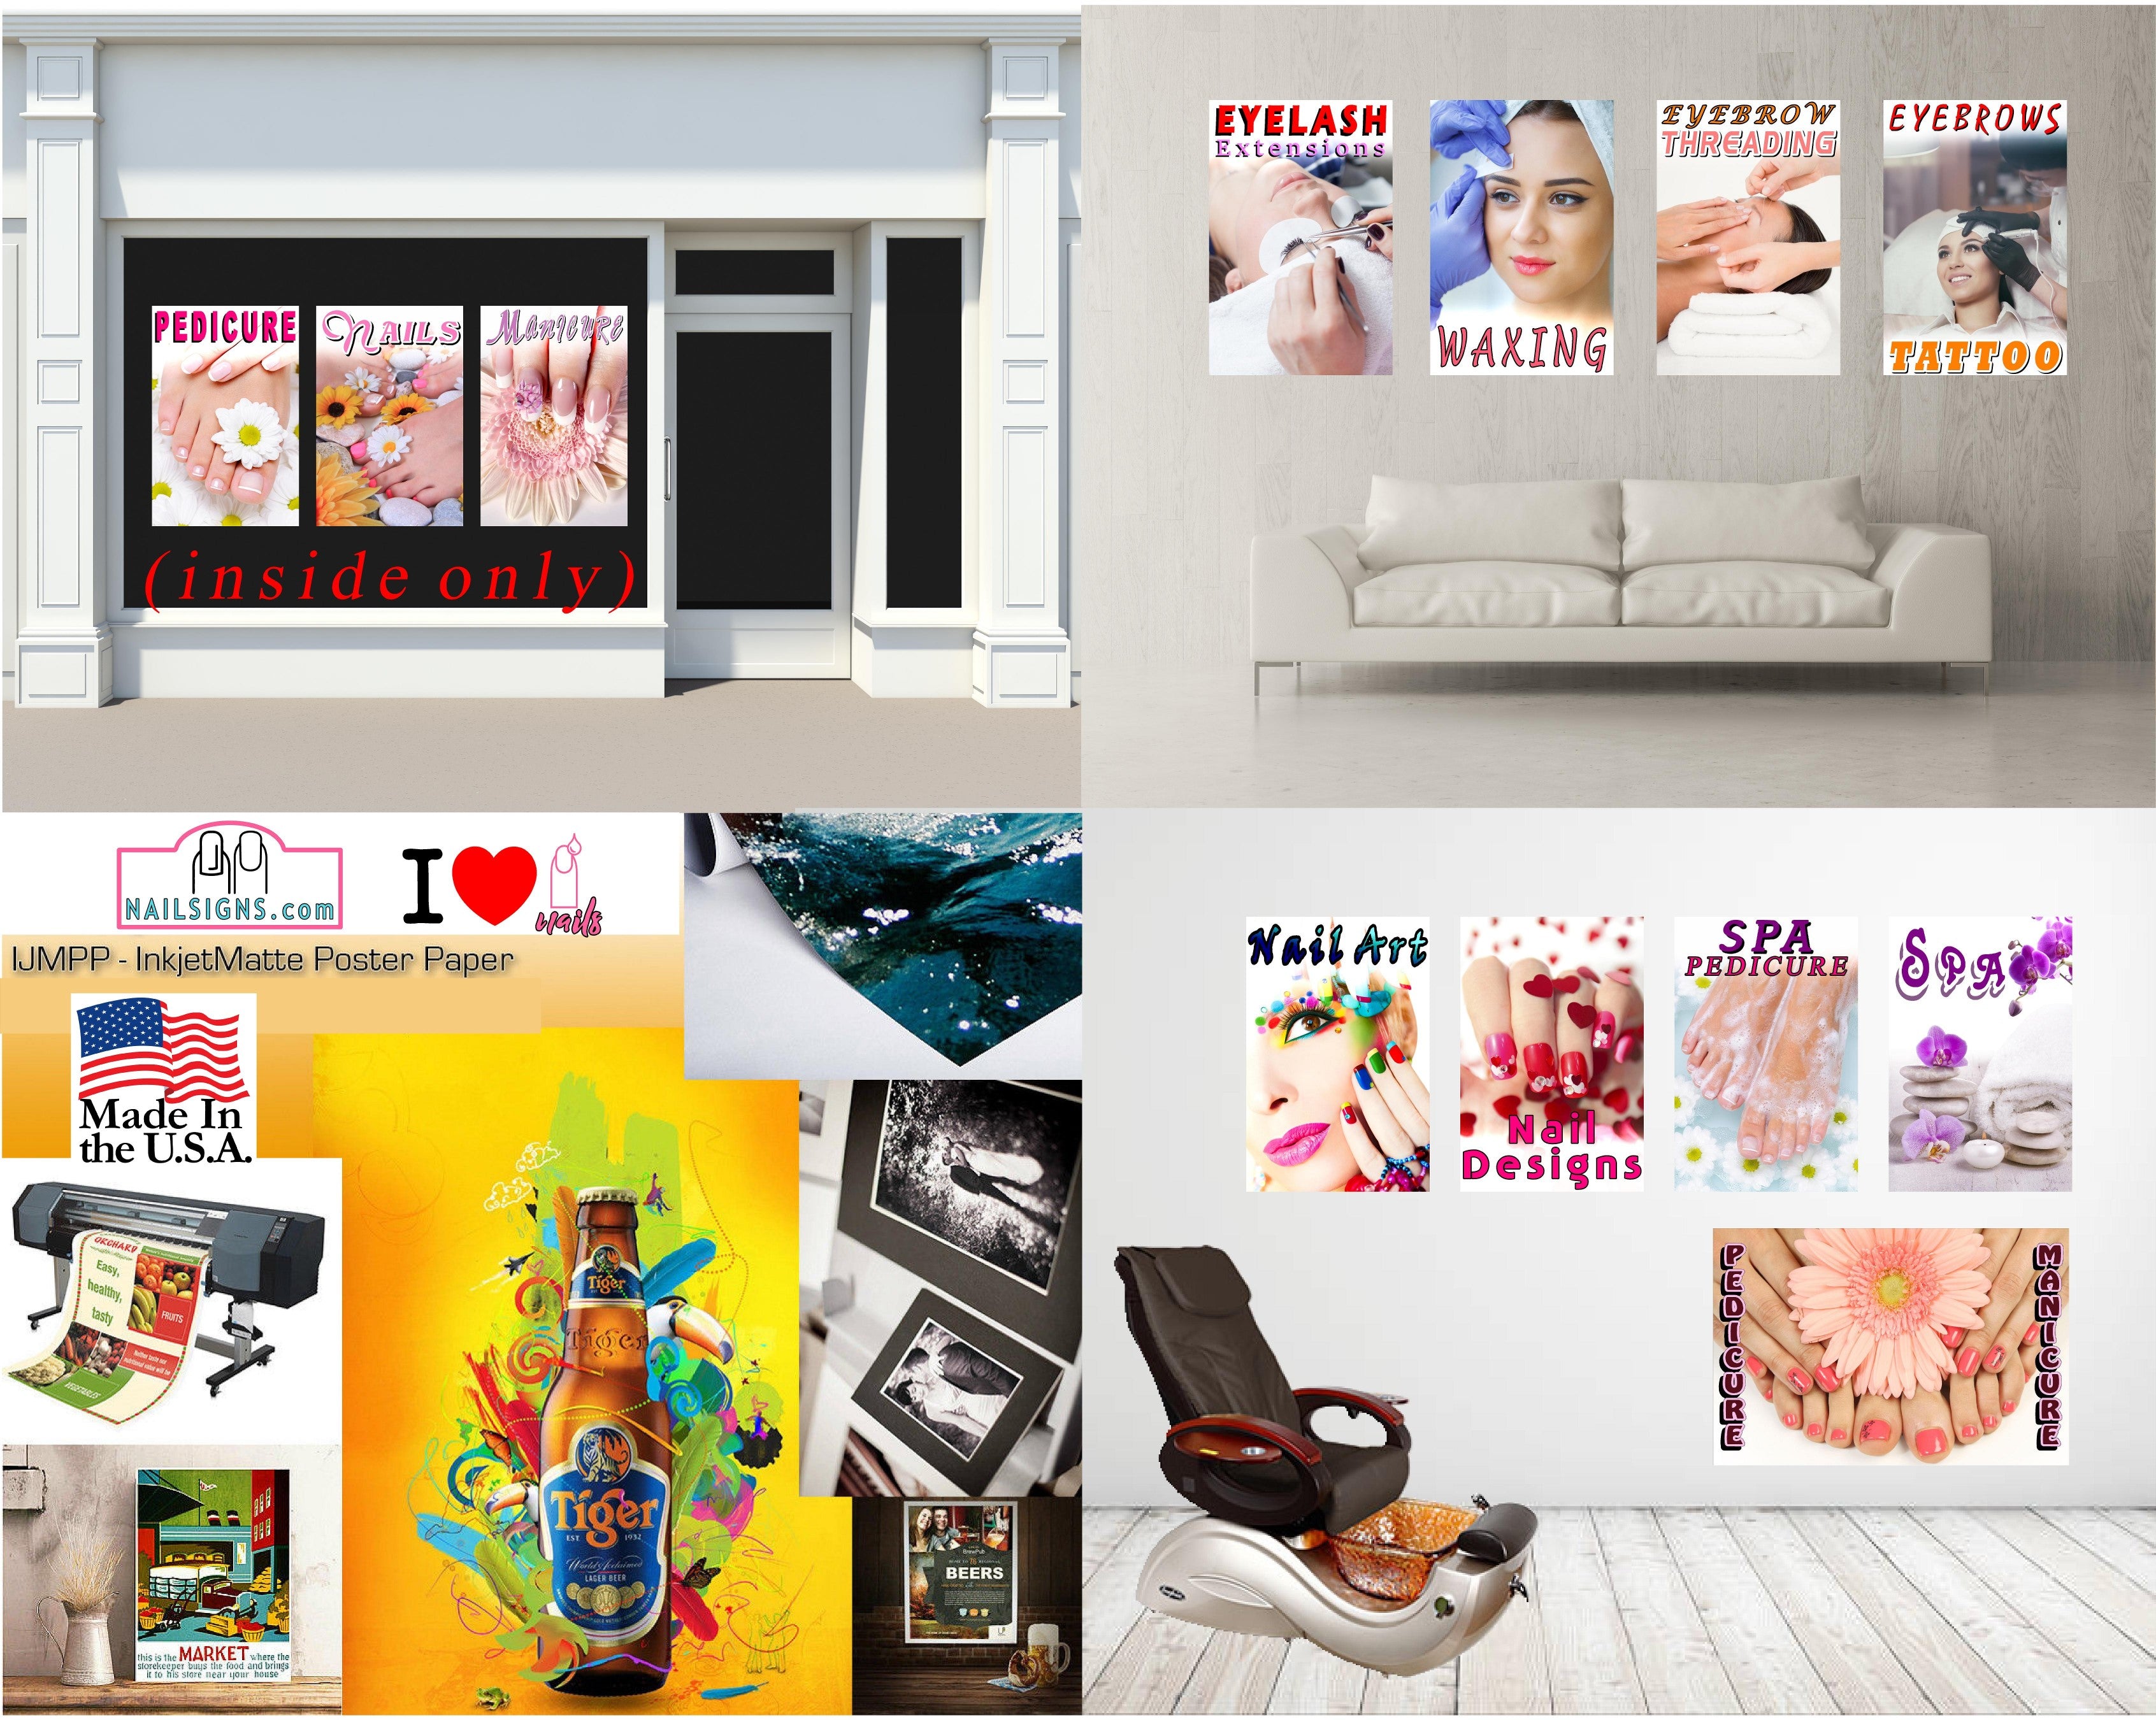 Eyelash 02 Photo-Realistic Paper Poster Premium Interior Inside Sign Advertising Marketing Wall Window Non-Laminated Extension Horizontal